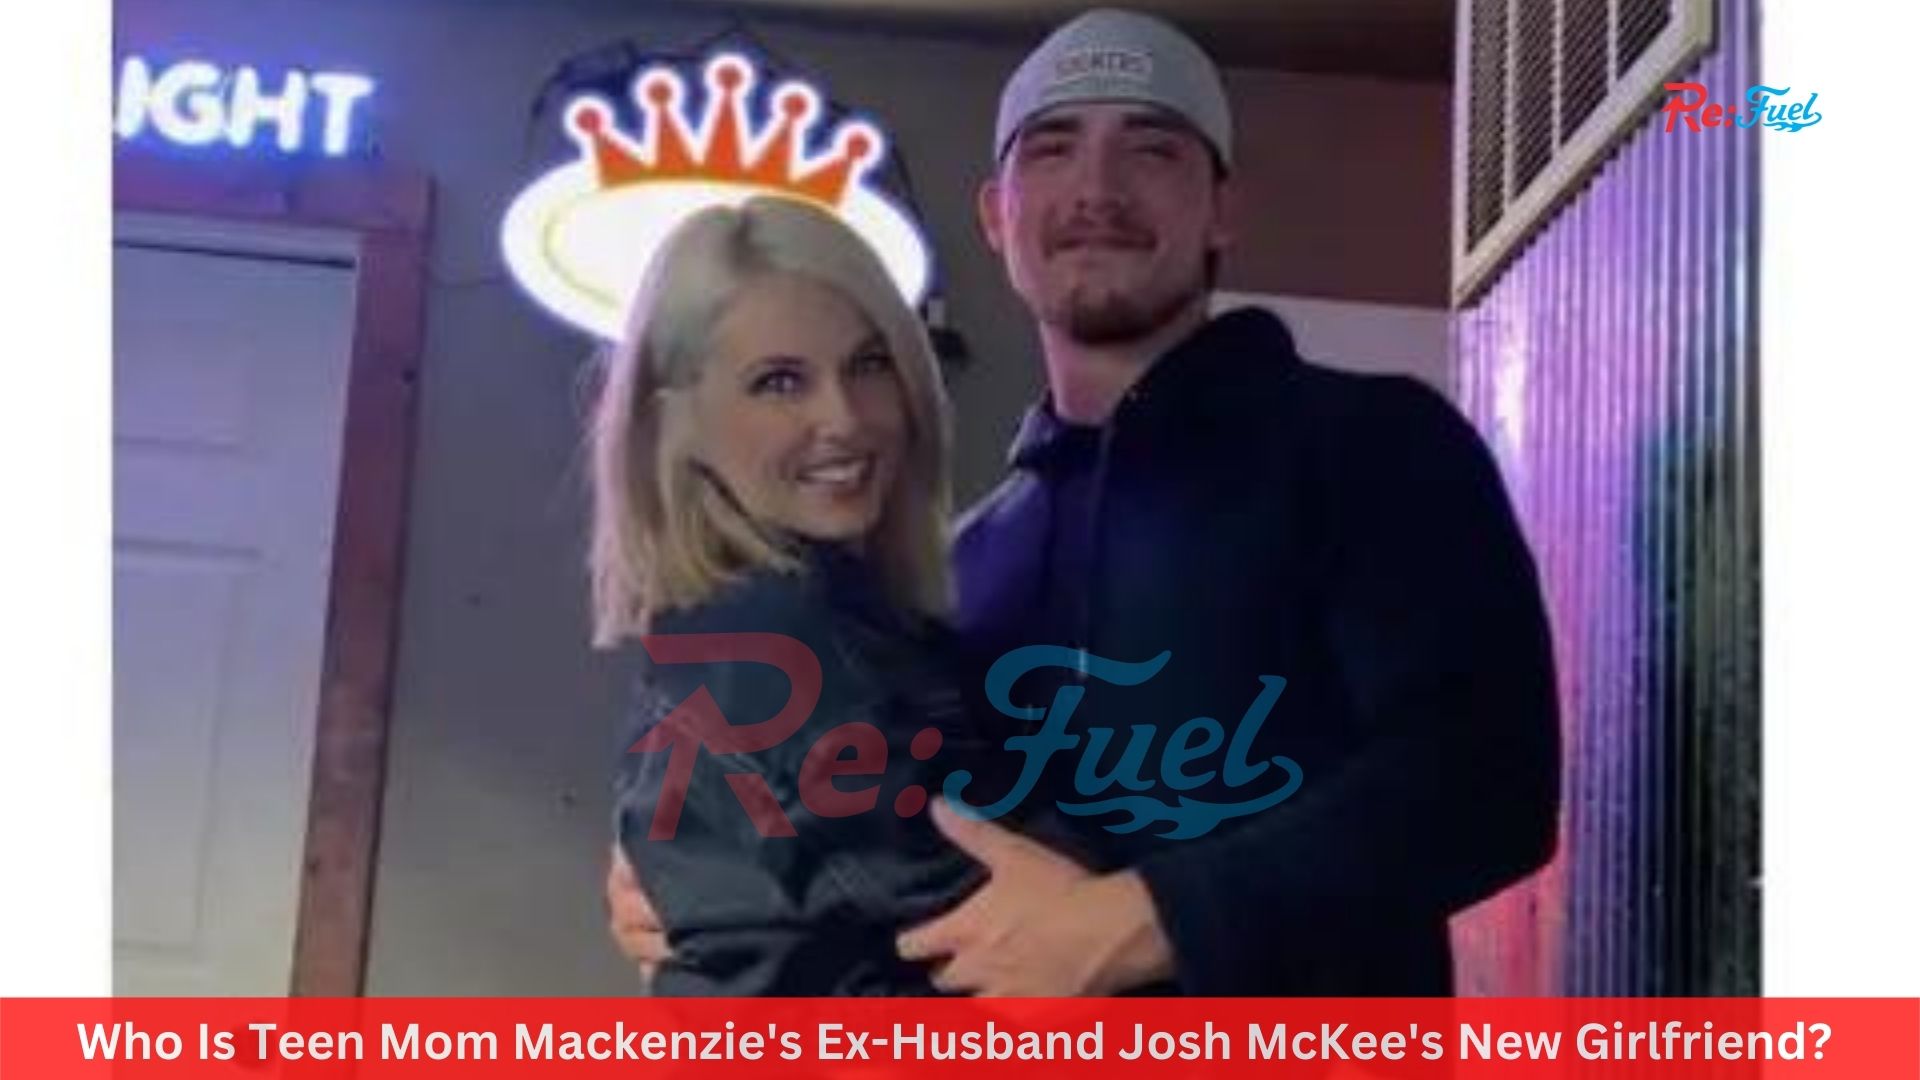 Who Is Teen Mom Mackenzie's Ex-Husband Josh McKee's New Girlfriend?